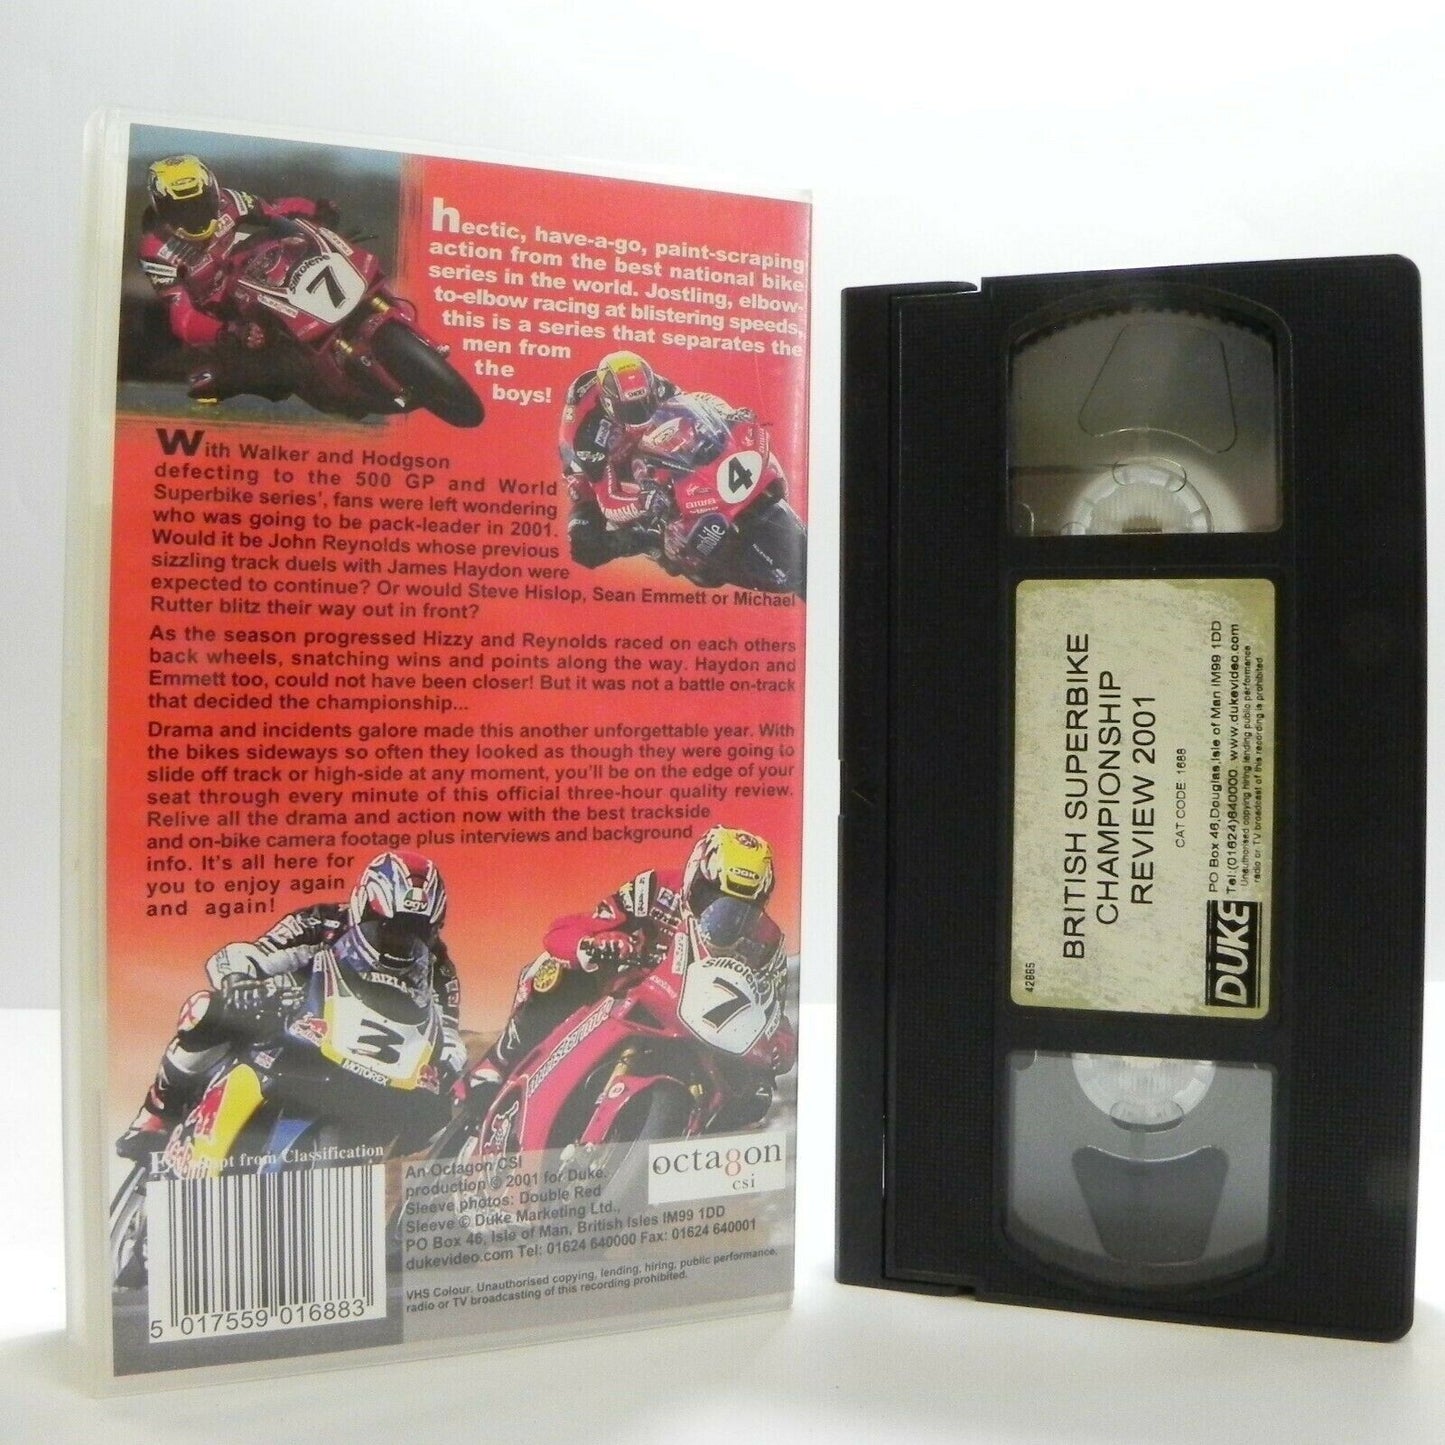 British Superbike: Championship Review 2001 - John Reynolds - Steve Hislop - VHS-